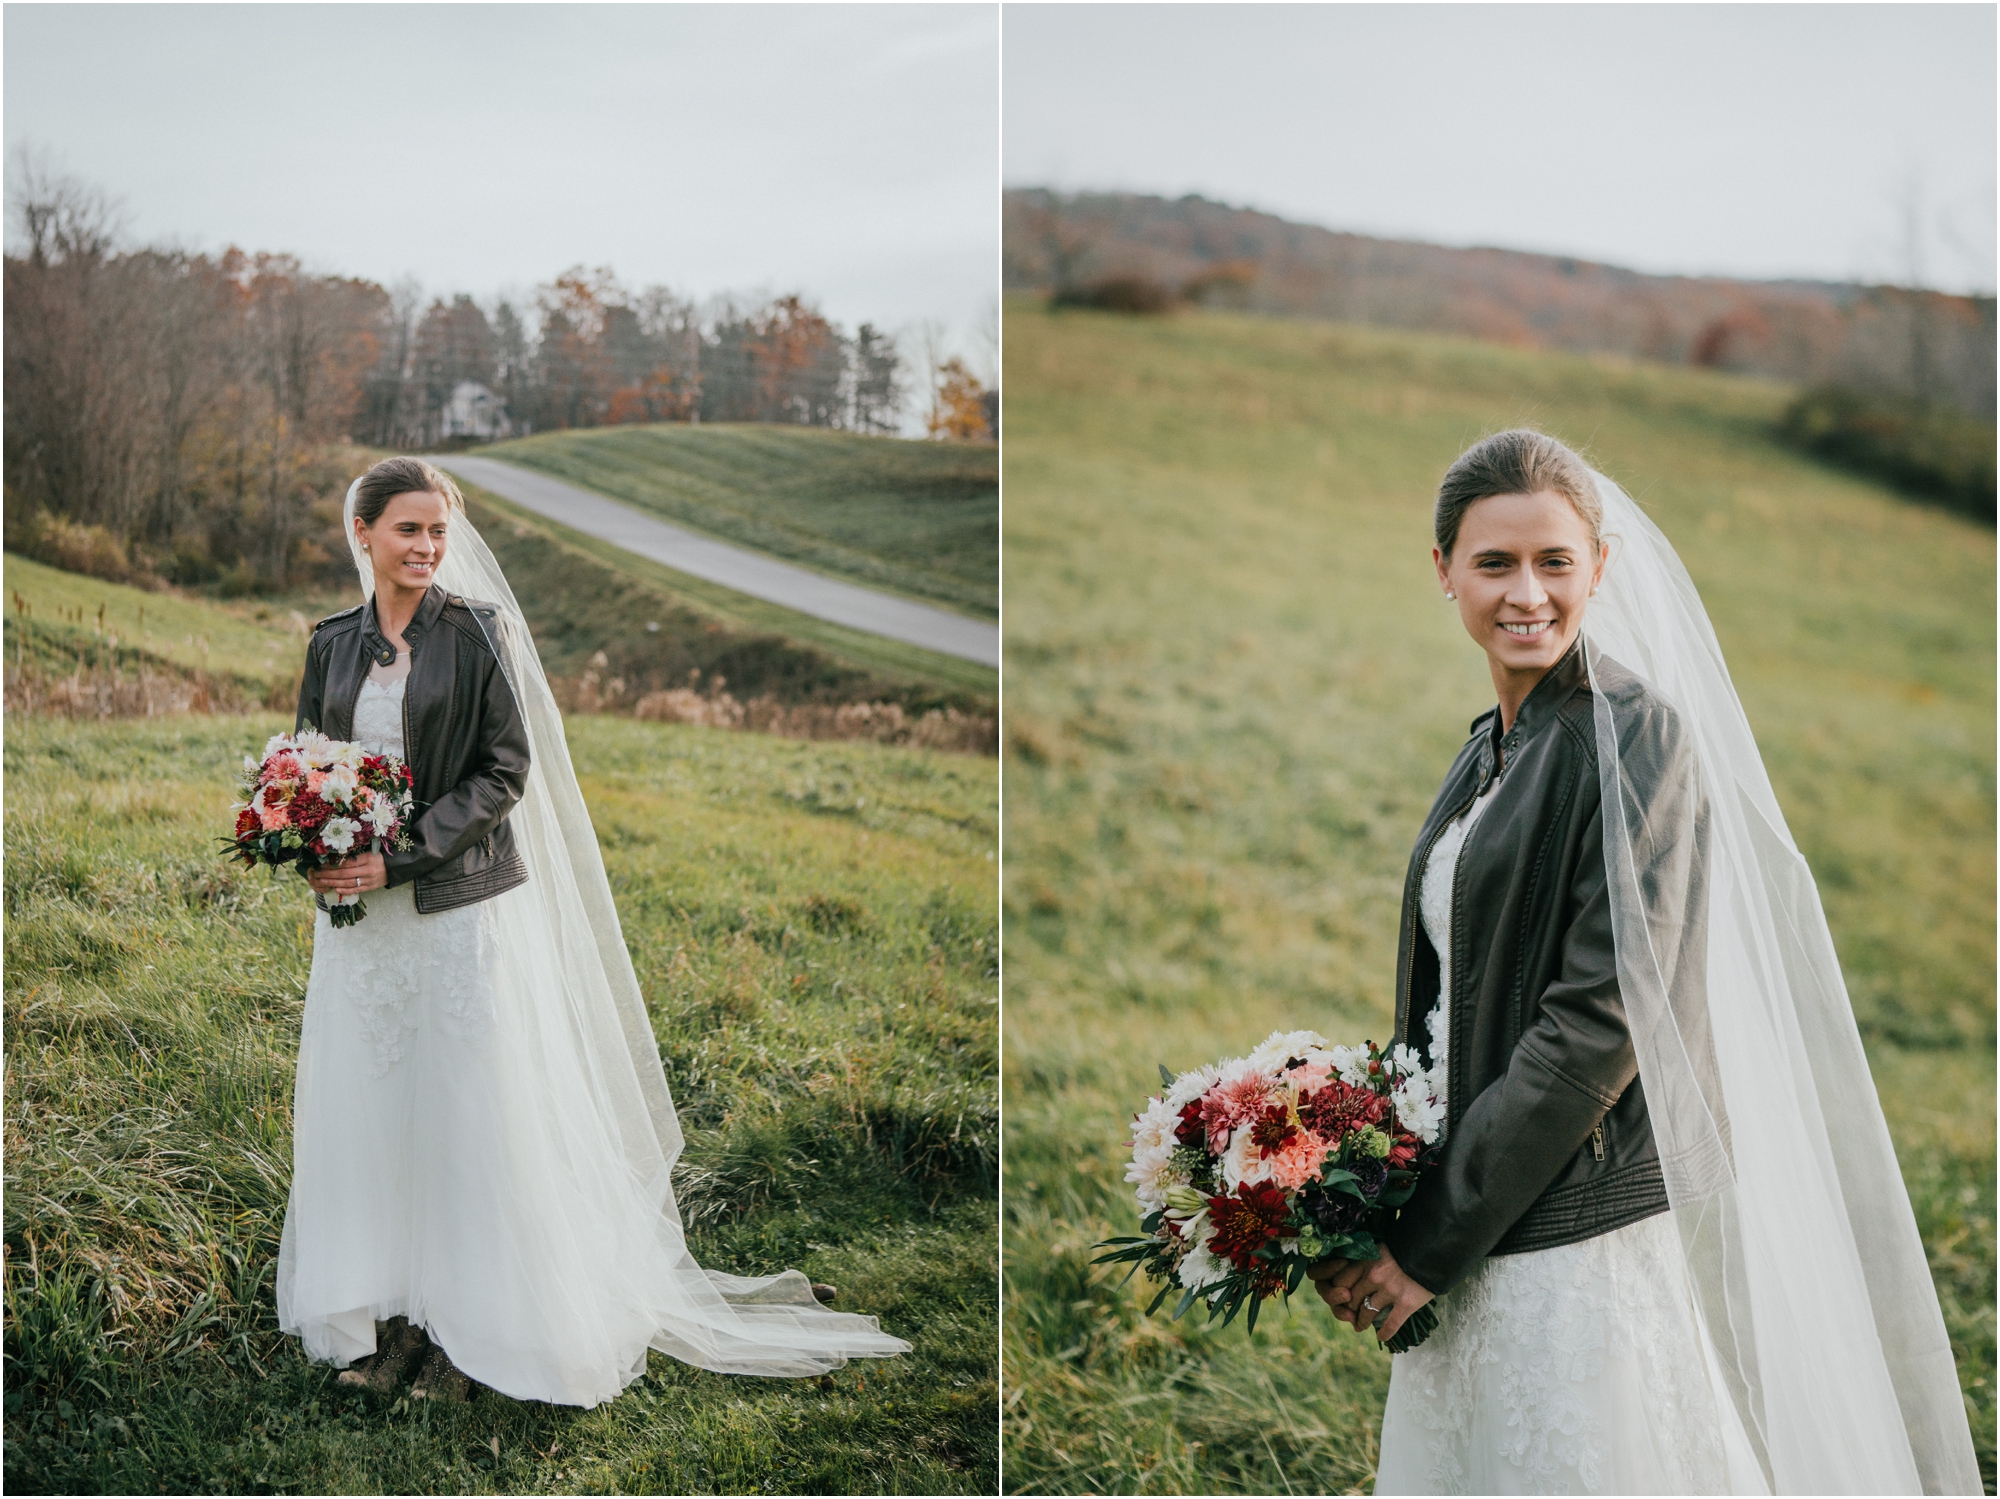 warm-springs-old-dairy-virginia-rustic-wedding-northeast-tennessee-elopement-adventuruous-photographer-katy-sergent_0058.jpg